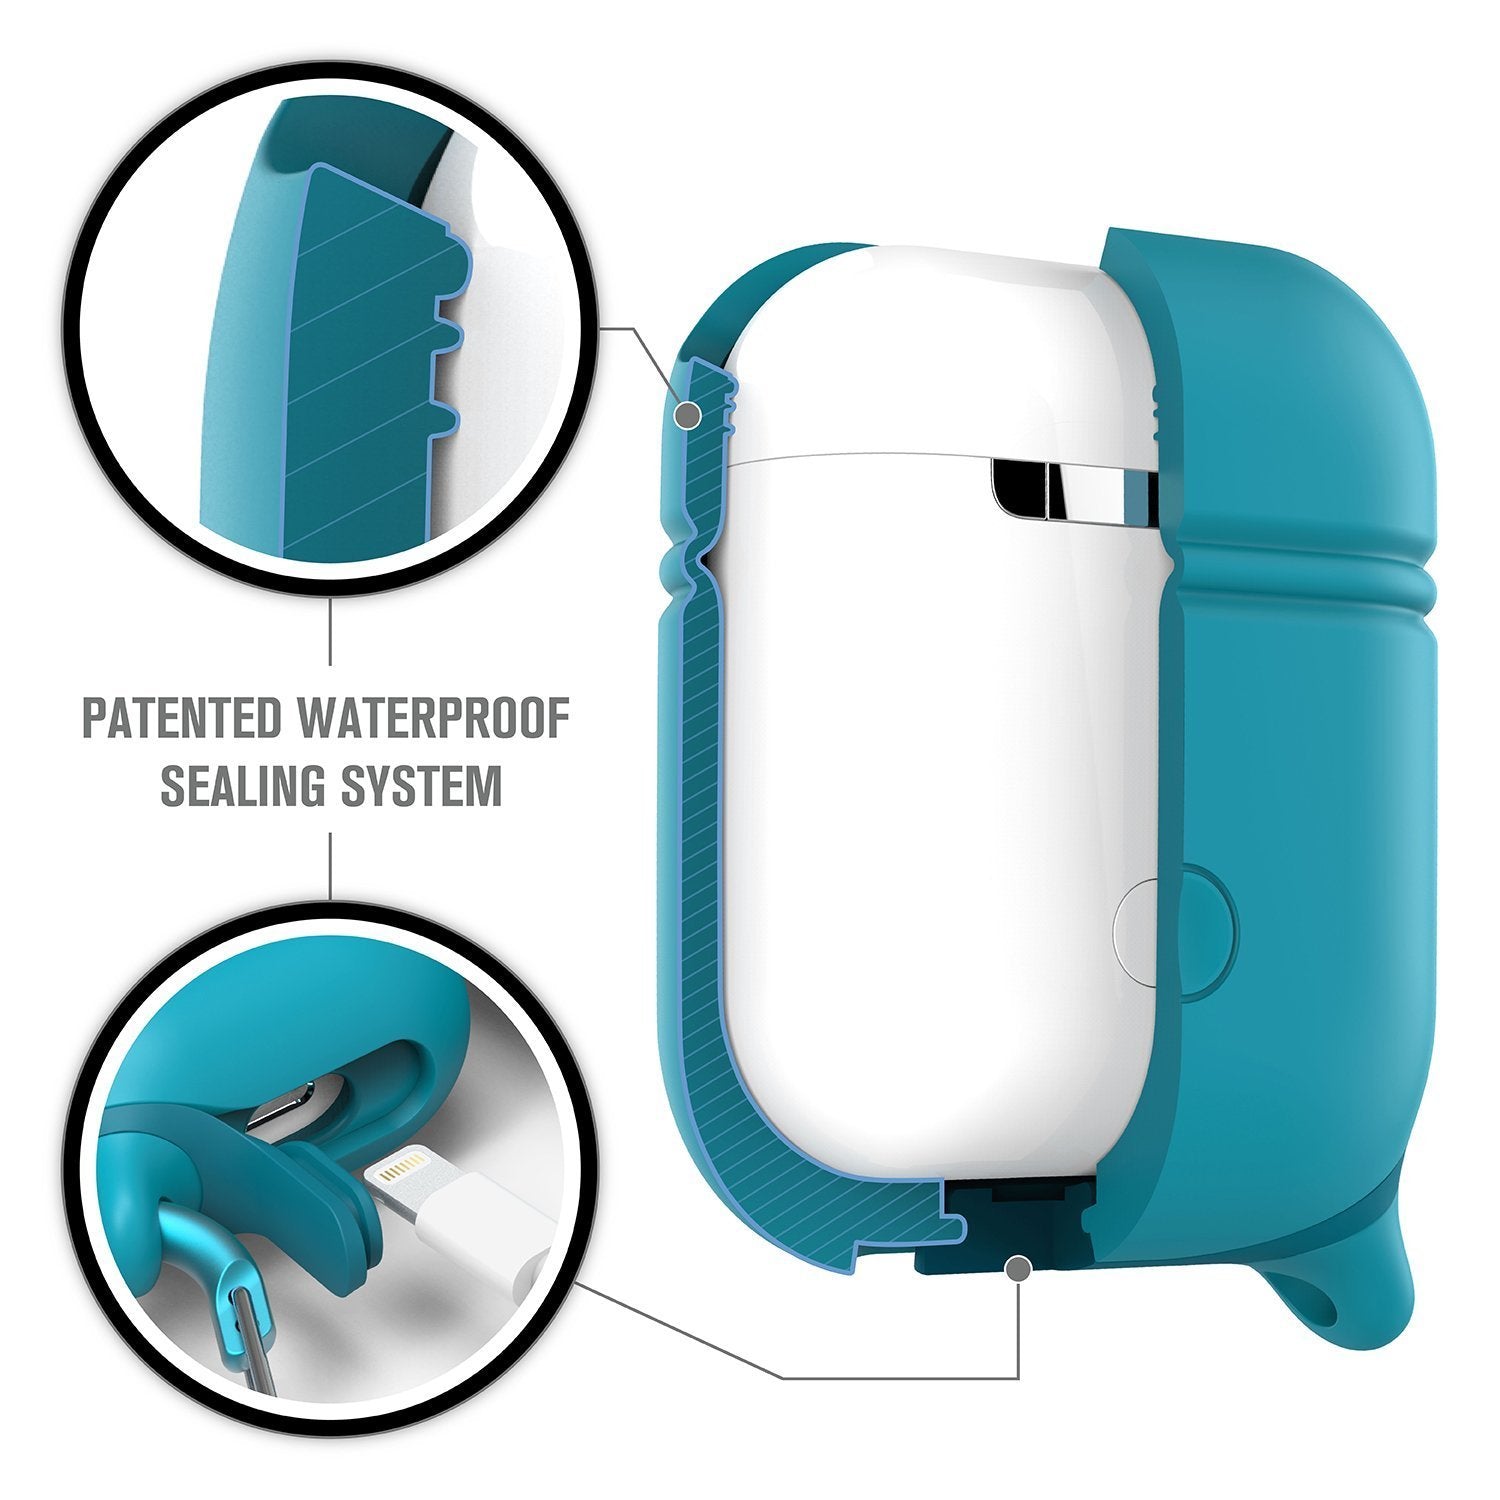 AirPods - Waterproof Case + Carabiner-UK